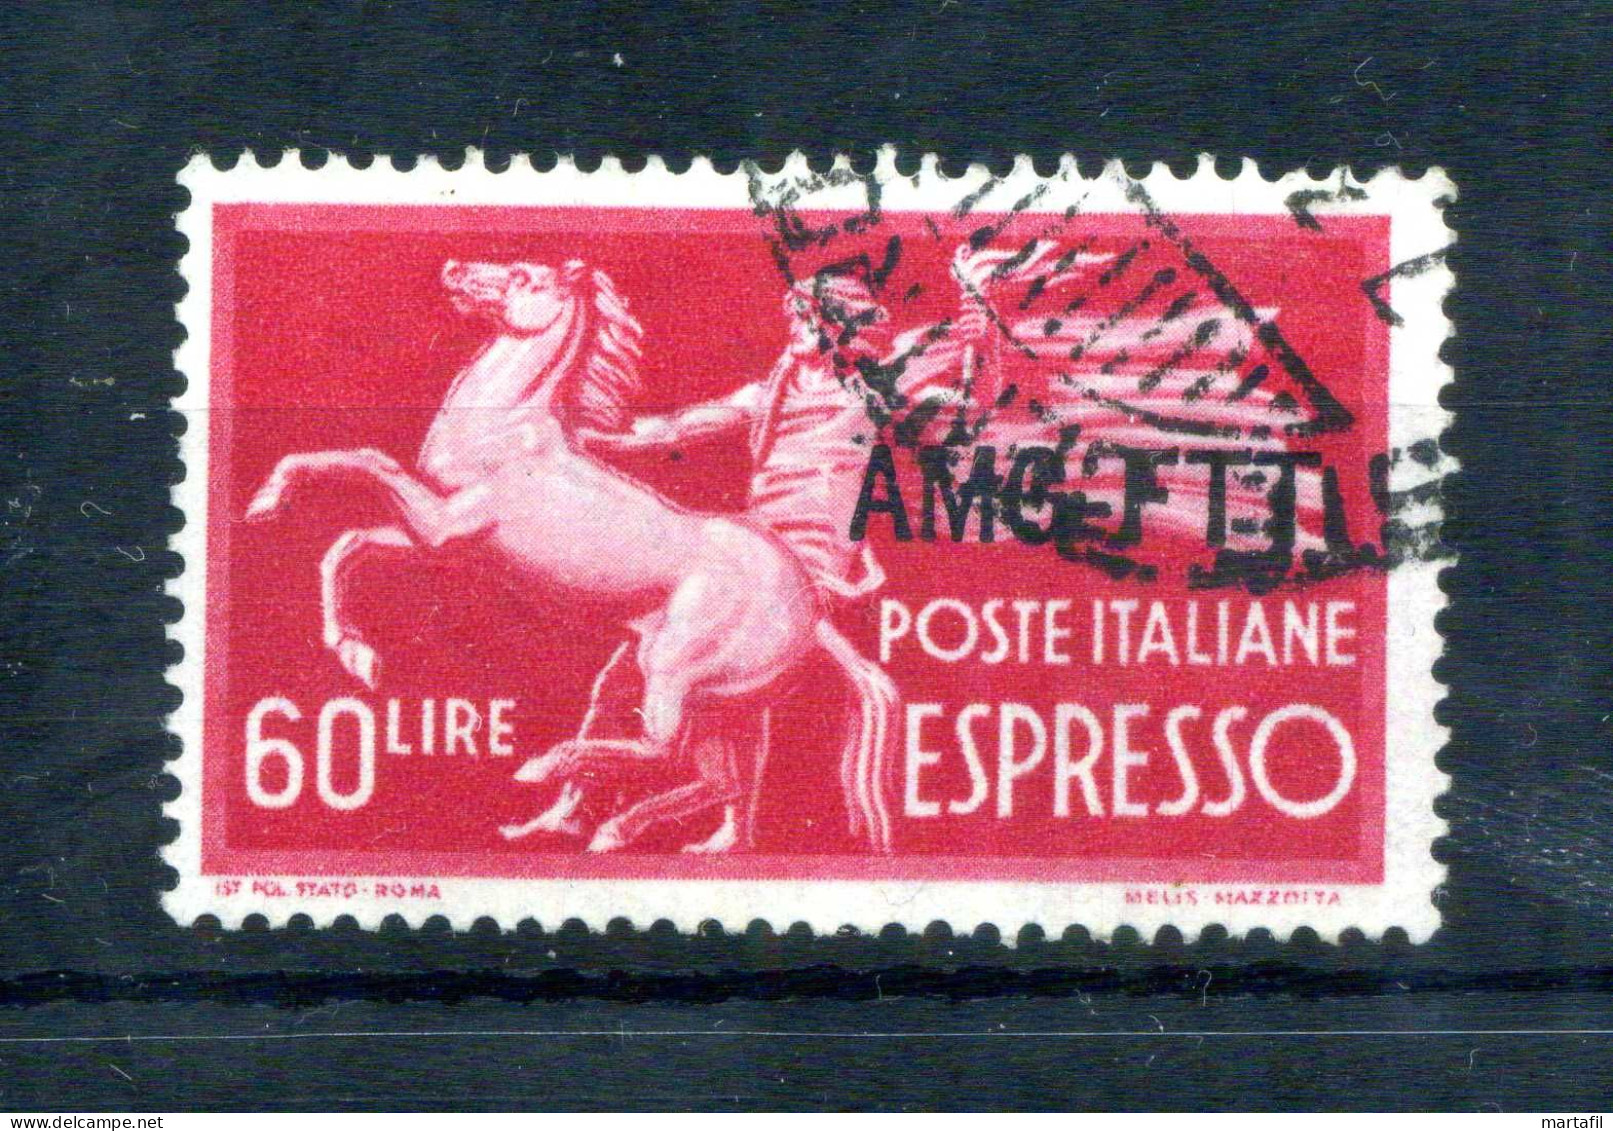 1950 Trieste Zona A Espresso S6 Usato, Serie Democratica - Express Mail